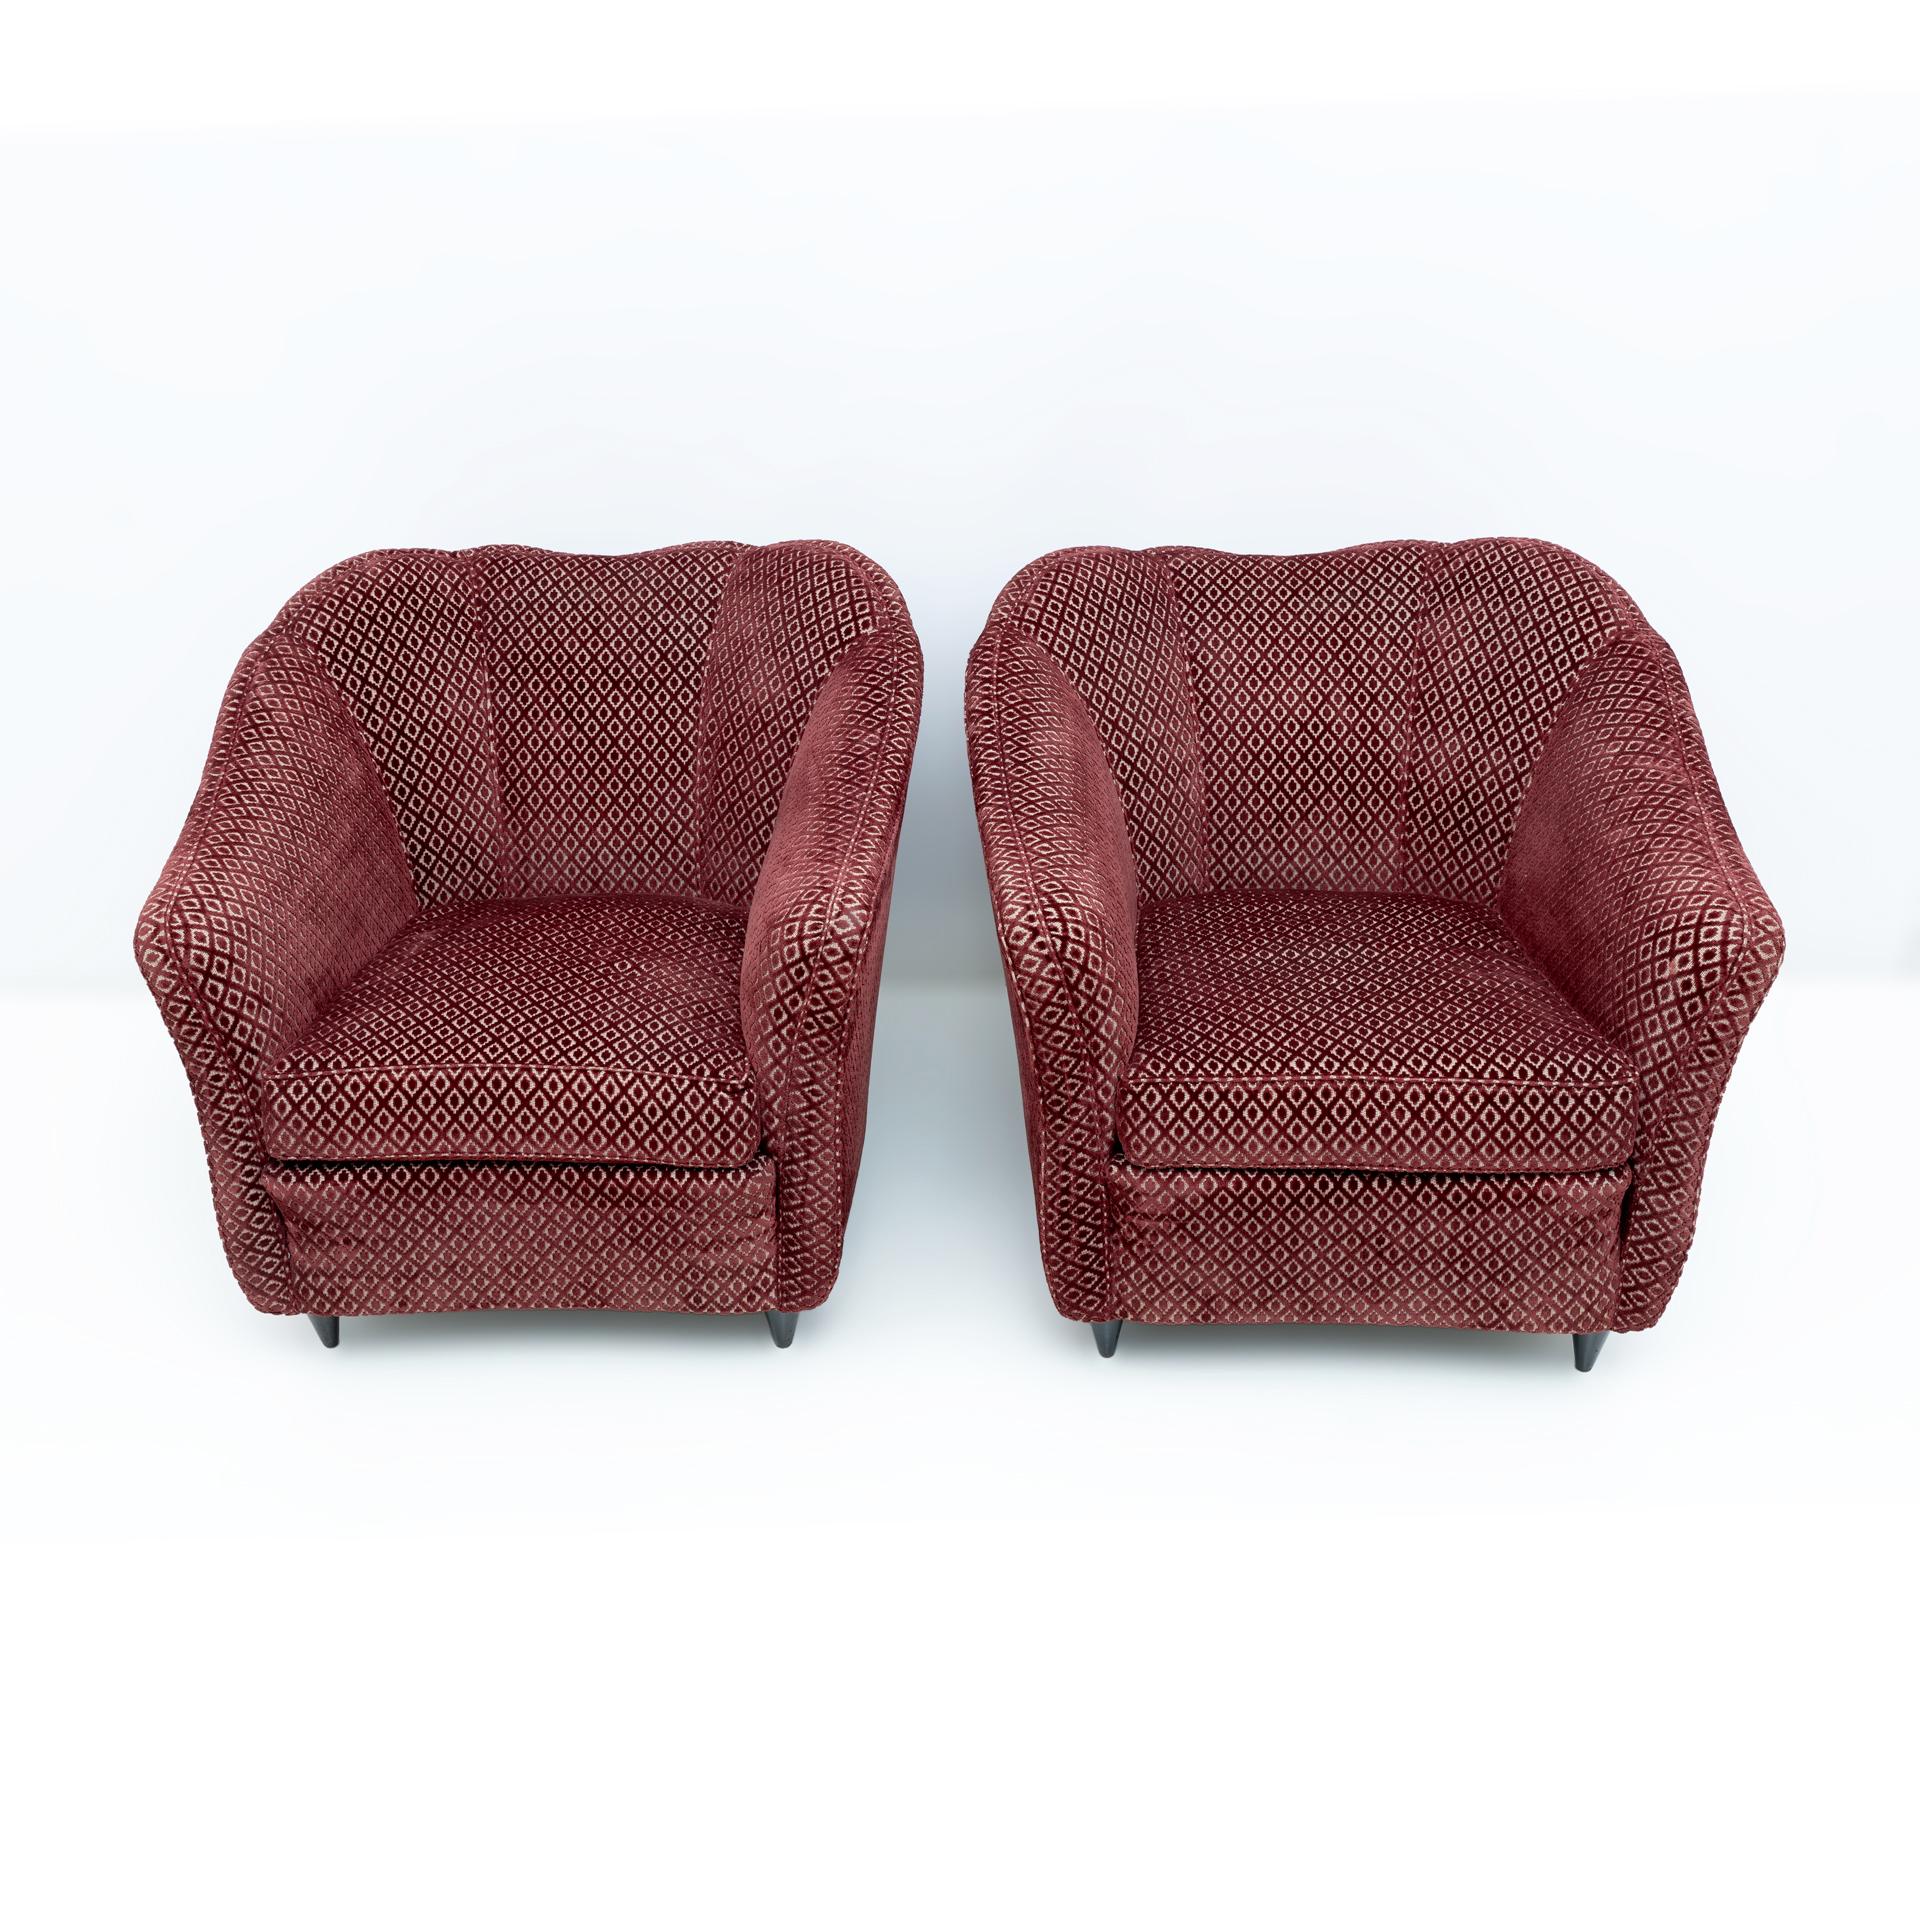 Italian Pair of Gio Ponti Mid-Century Modern Velvet Armchairs for Casa e Giardino, 1950s For Sale